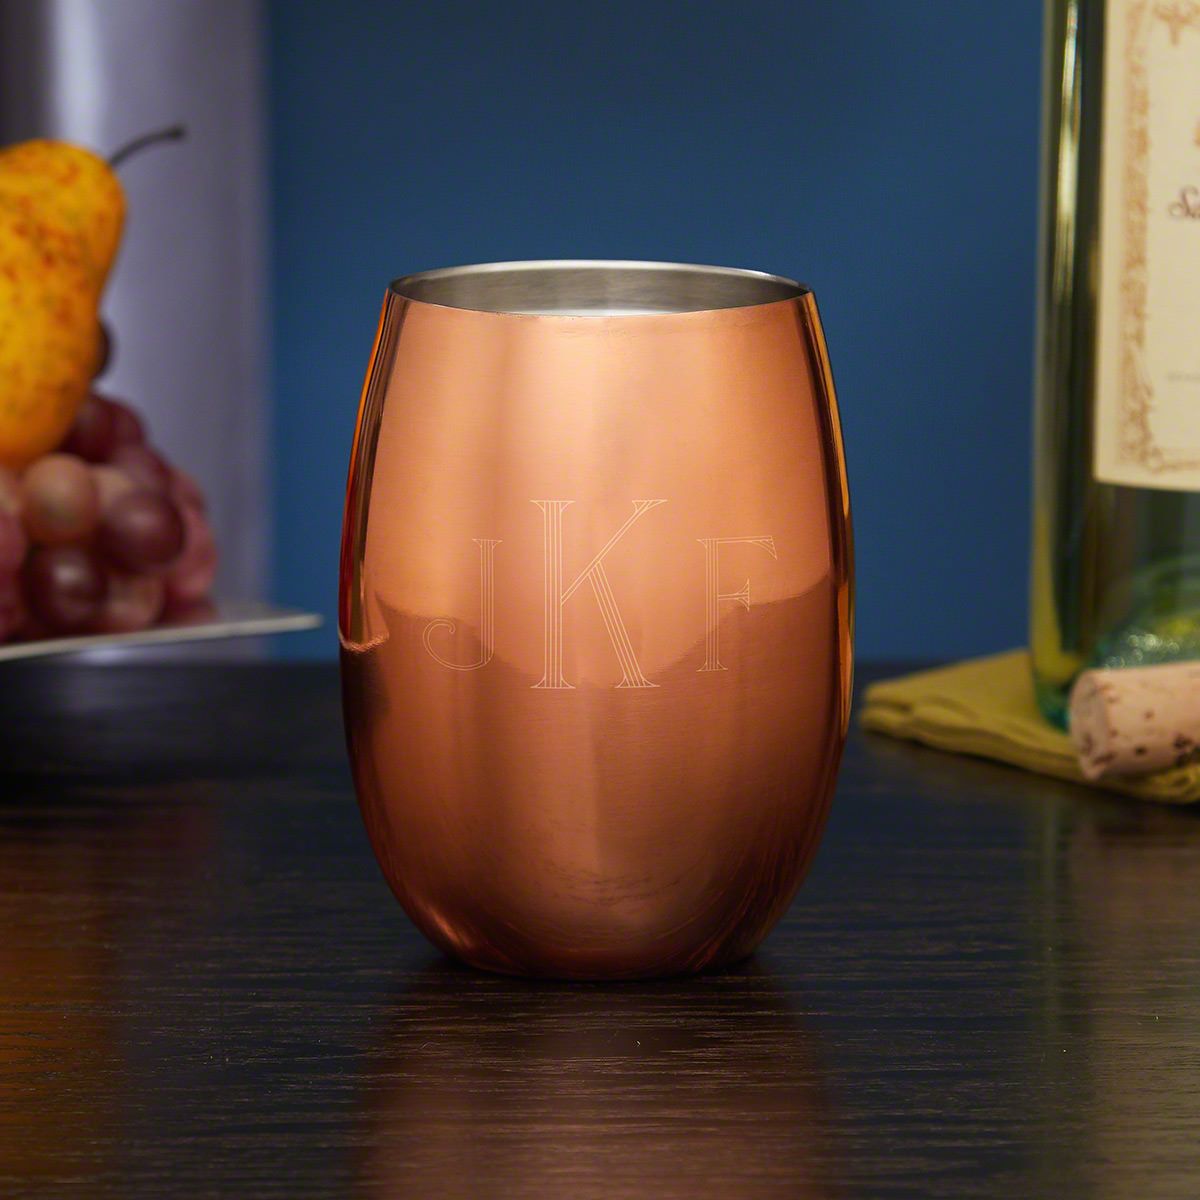 Classic Monogram Engraved Copper Wine Glass